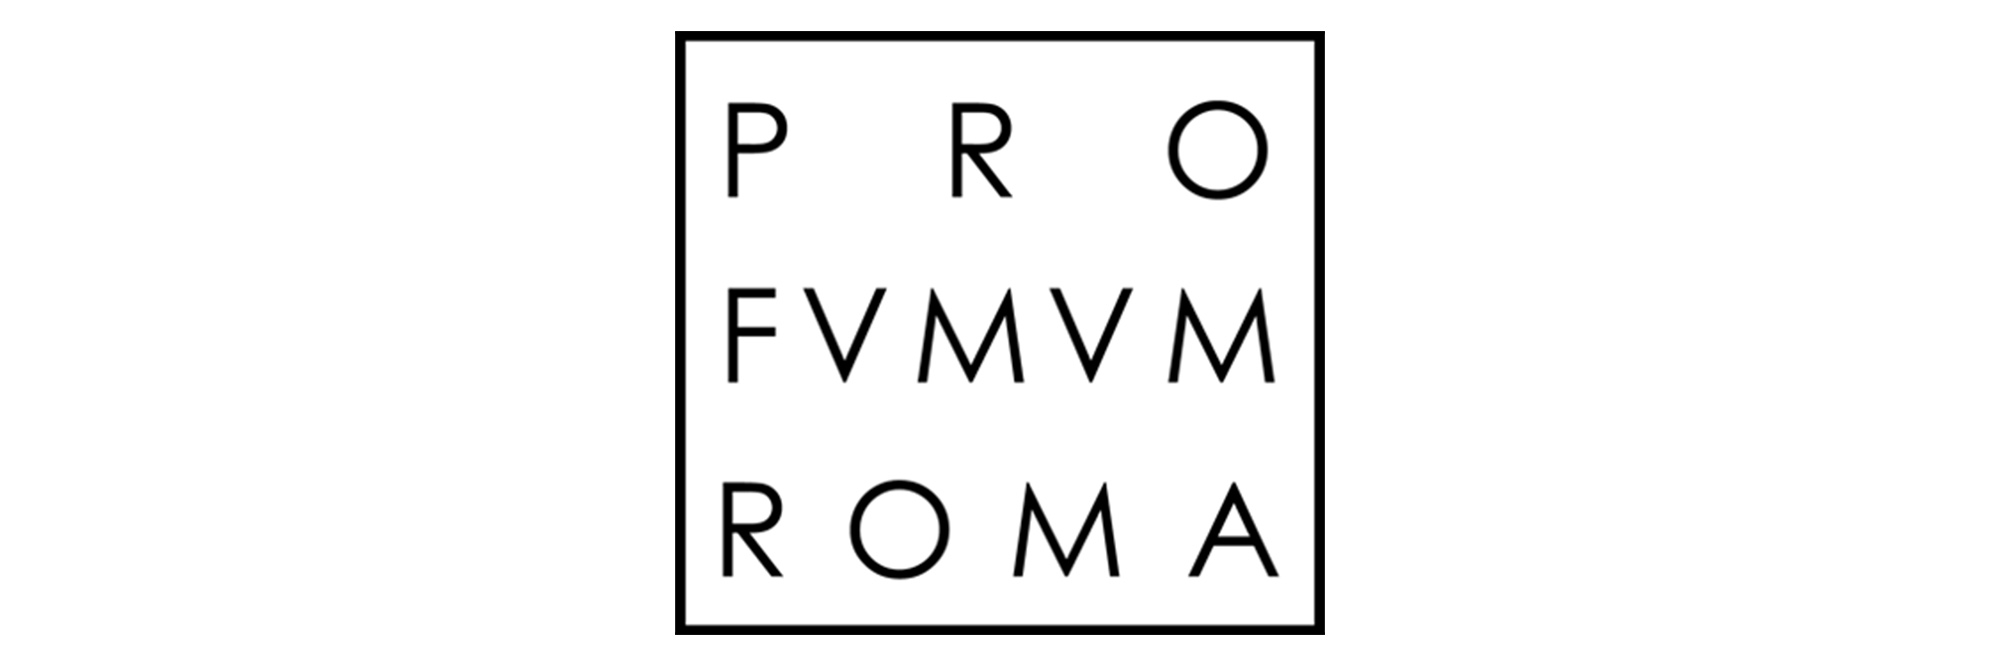 پروفومم روما| profumum roma